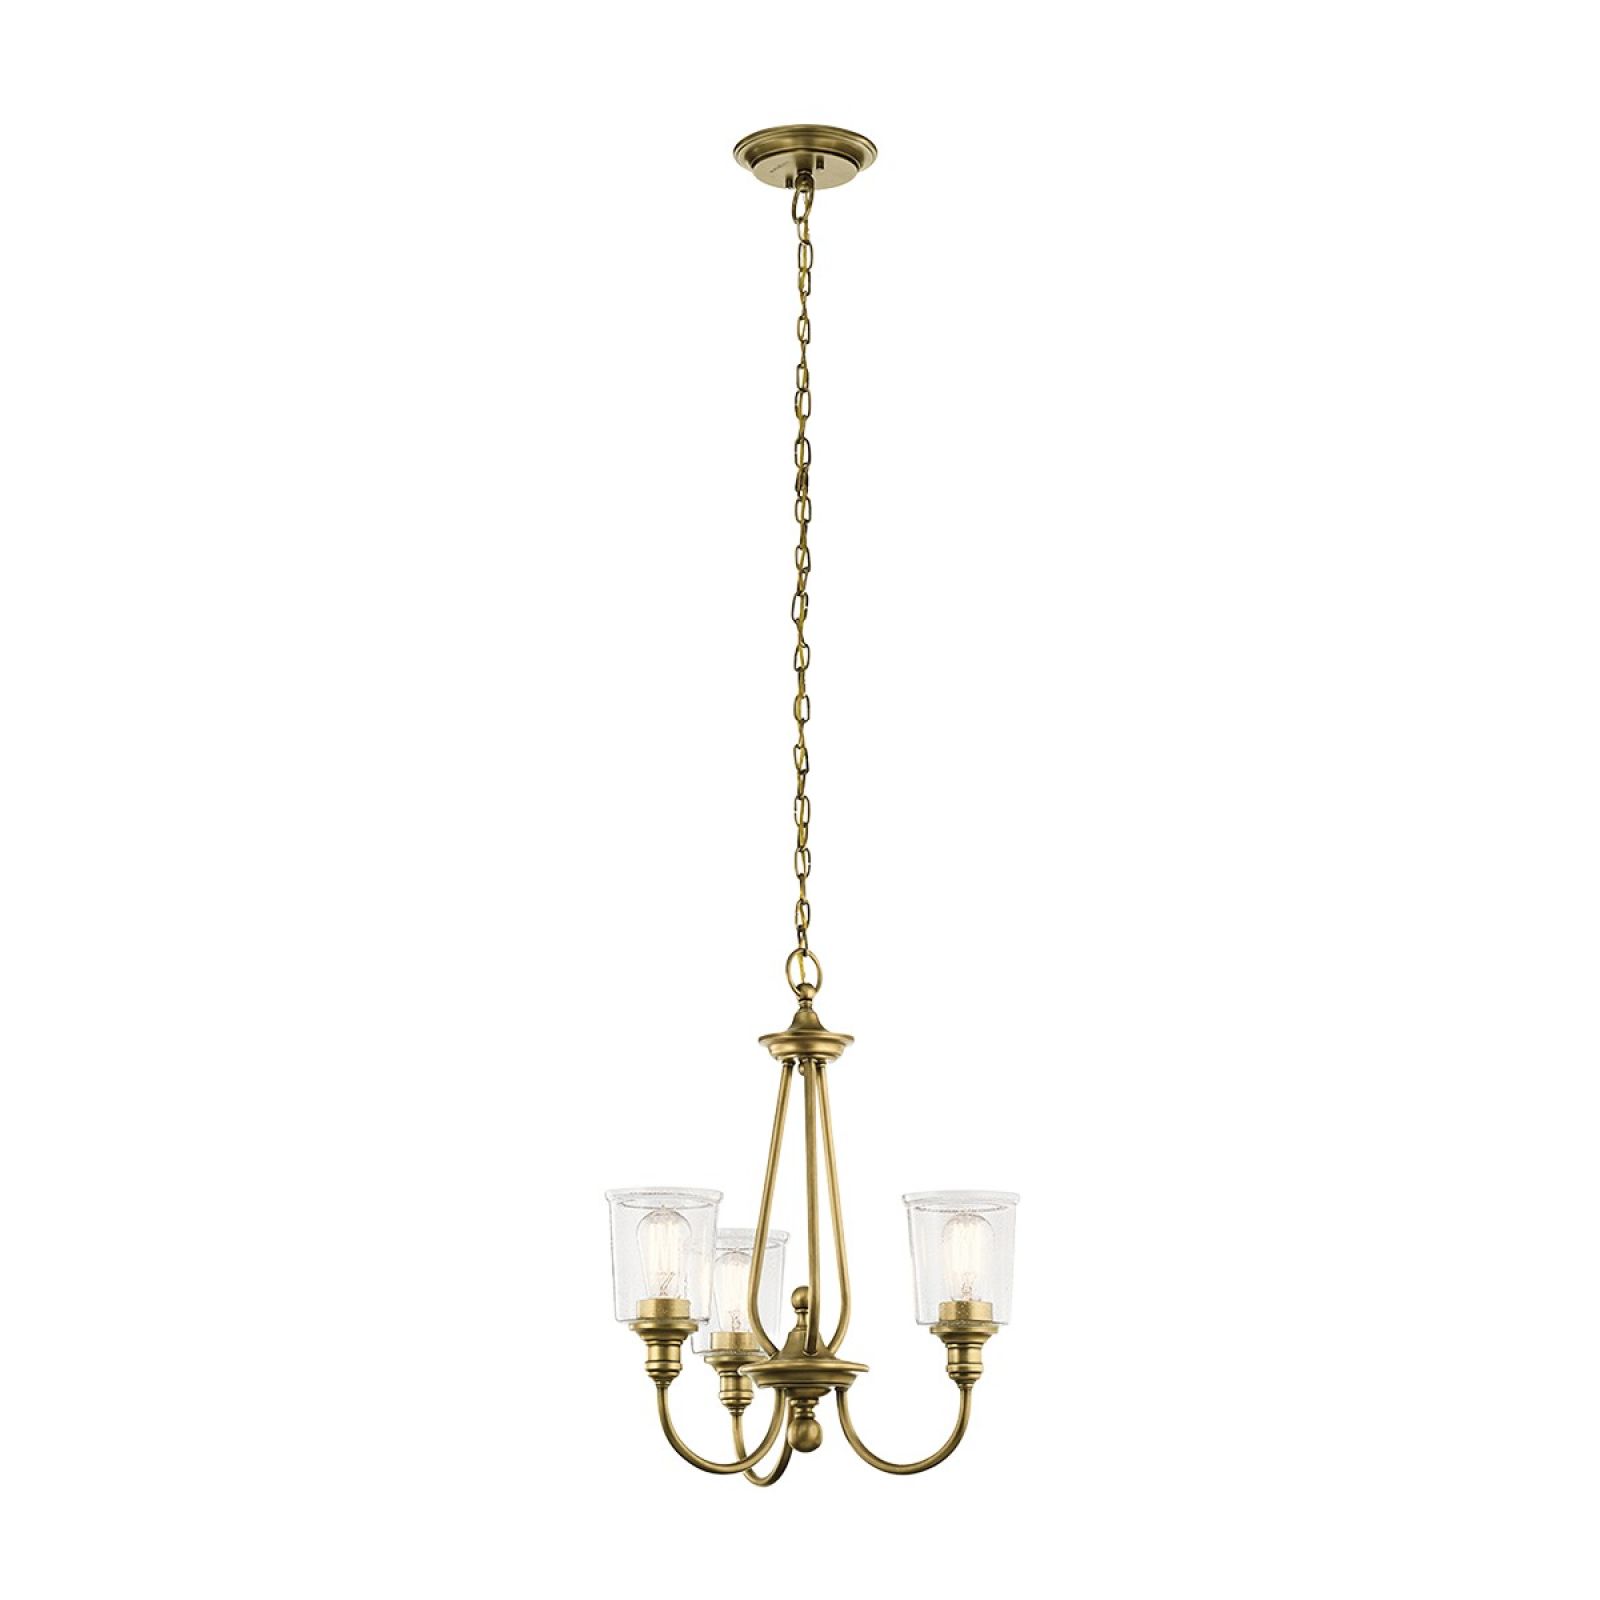 Waverley 3 light small chandelier in natural brass